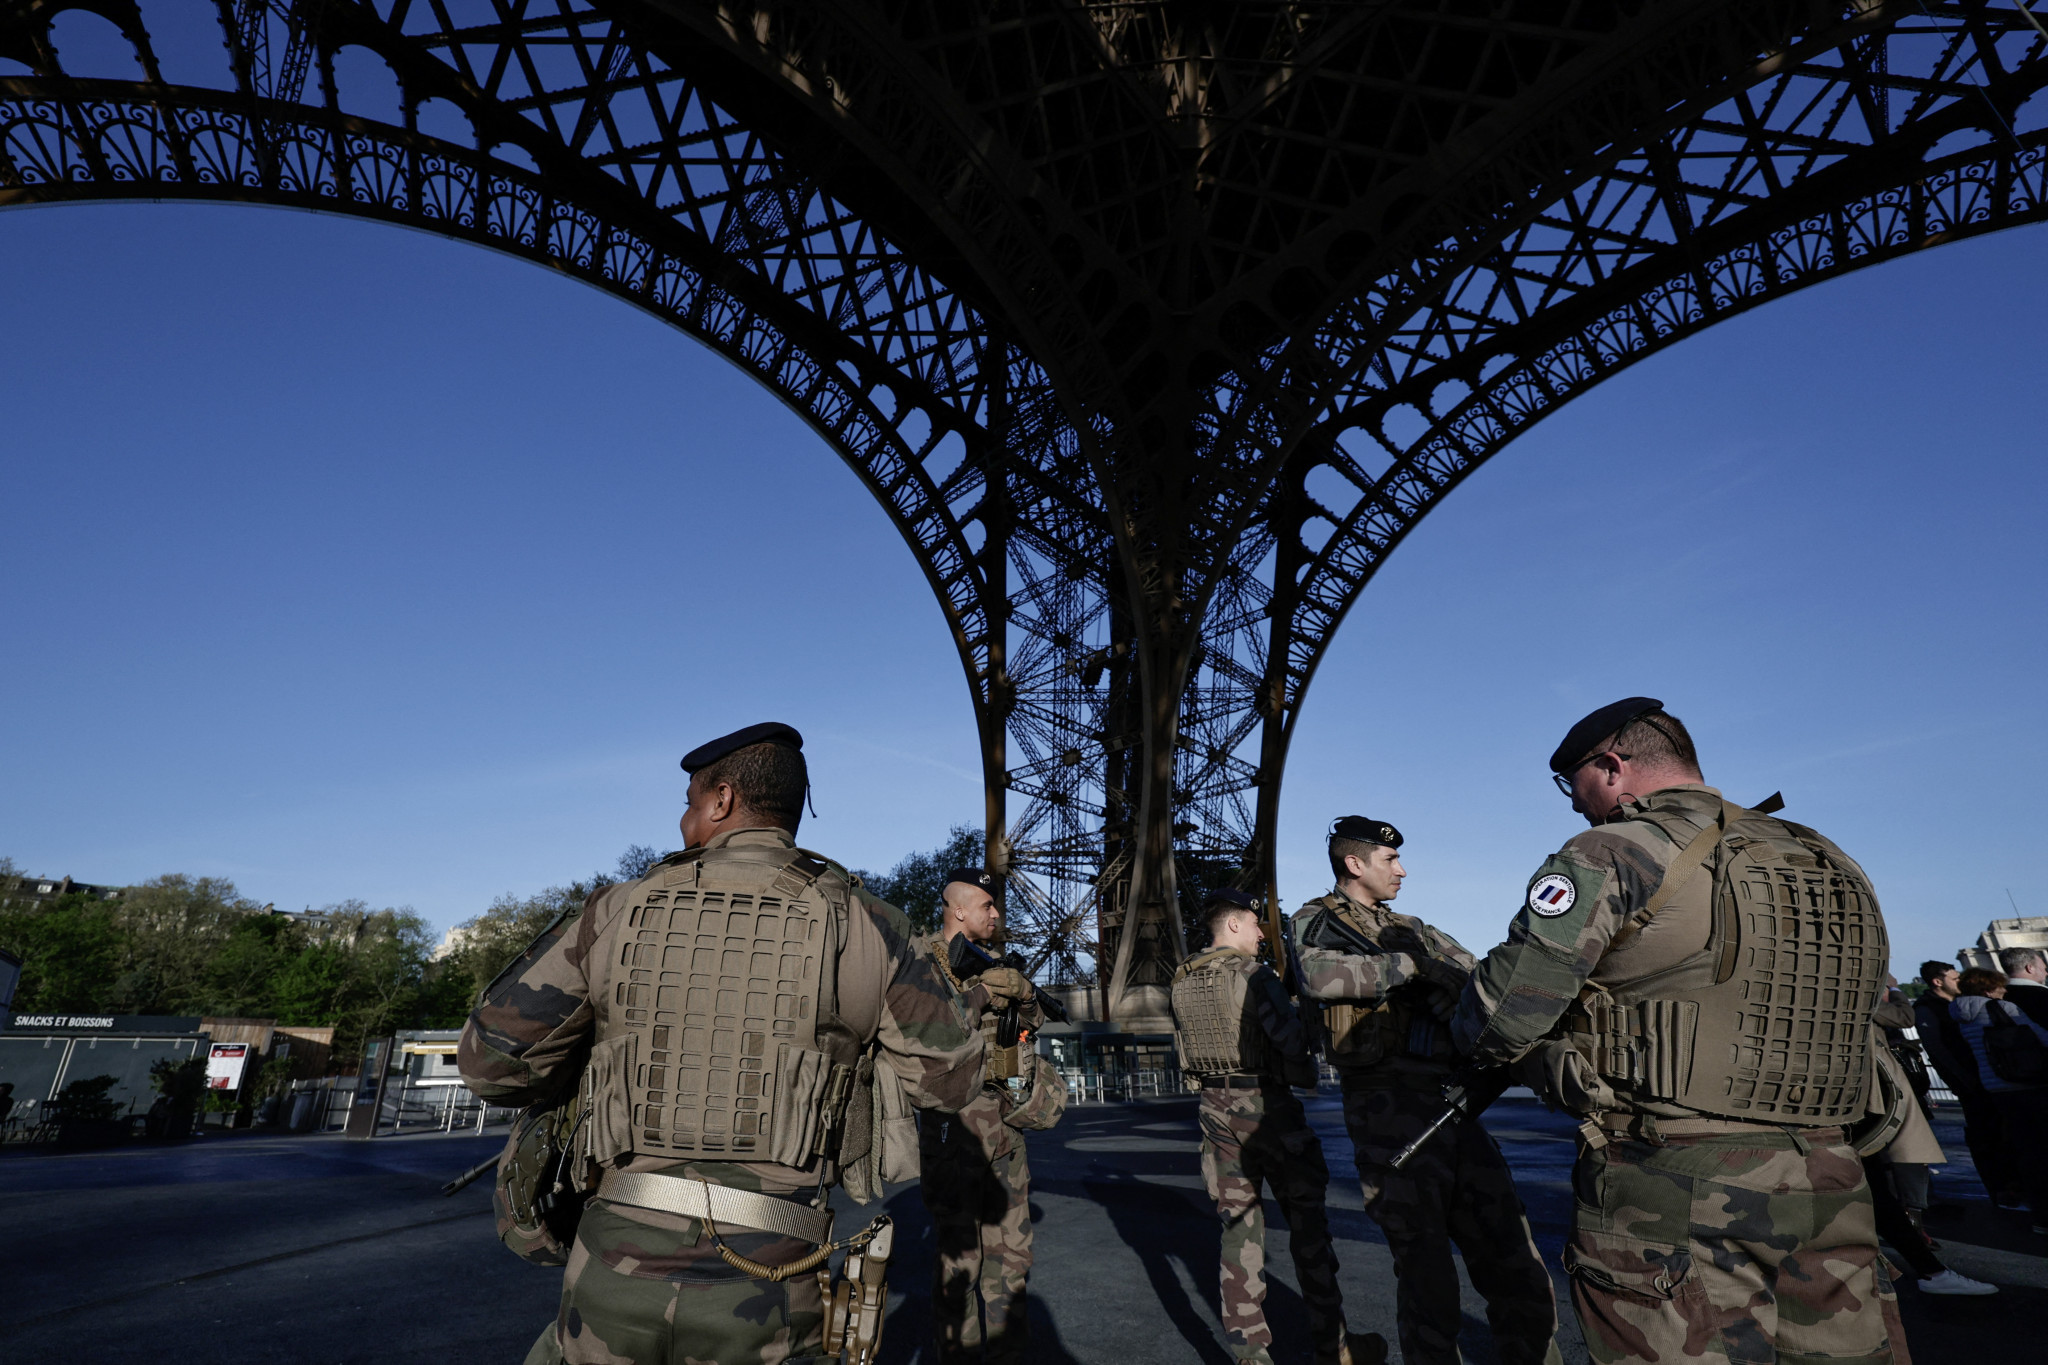 Police presence in Paris is unprecedented. GETTY IMAGES